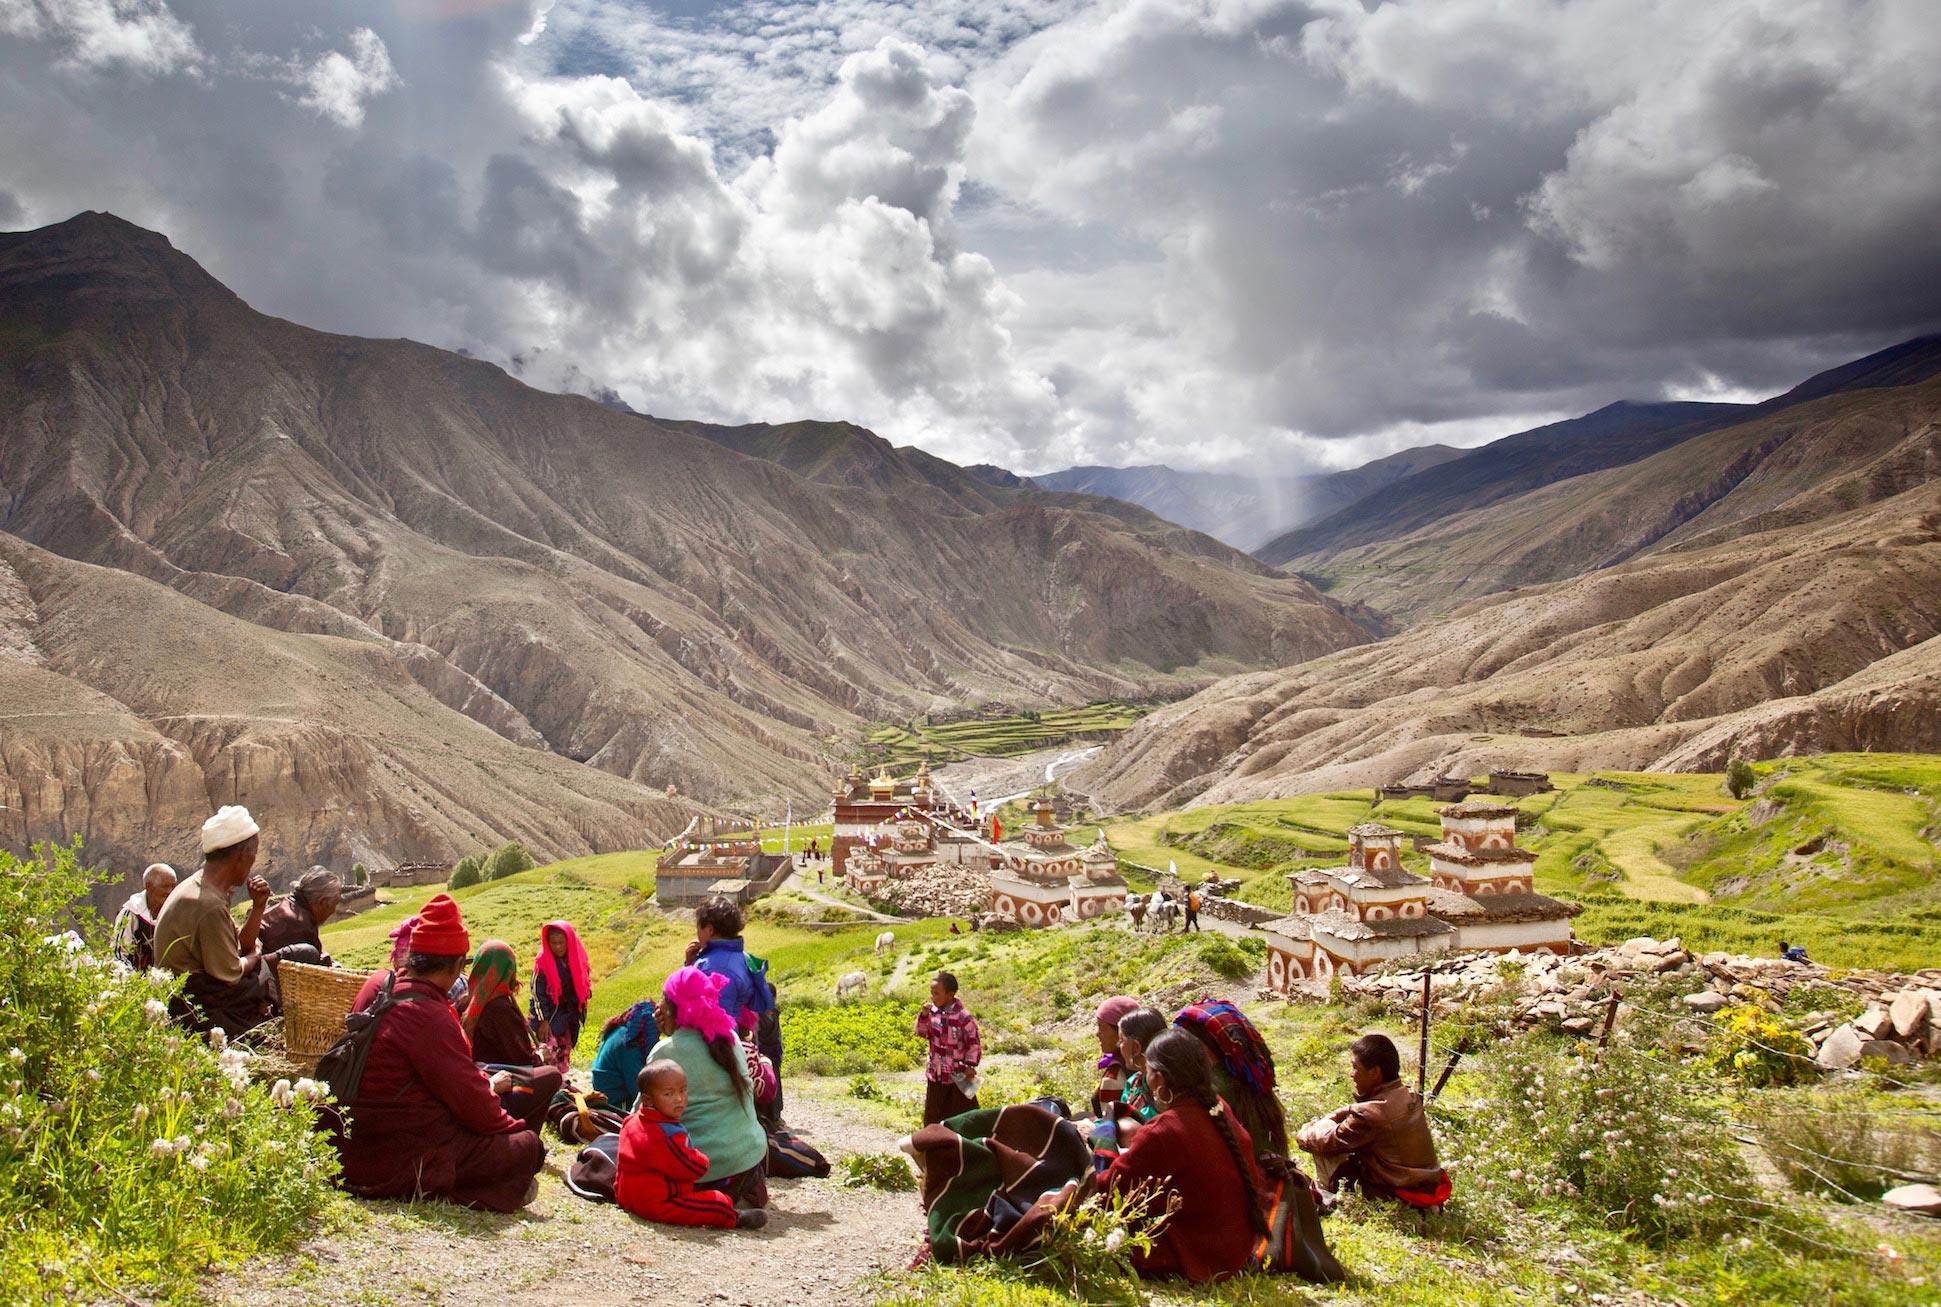 local people, Inner Dolpo region of Nepal